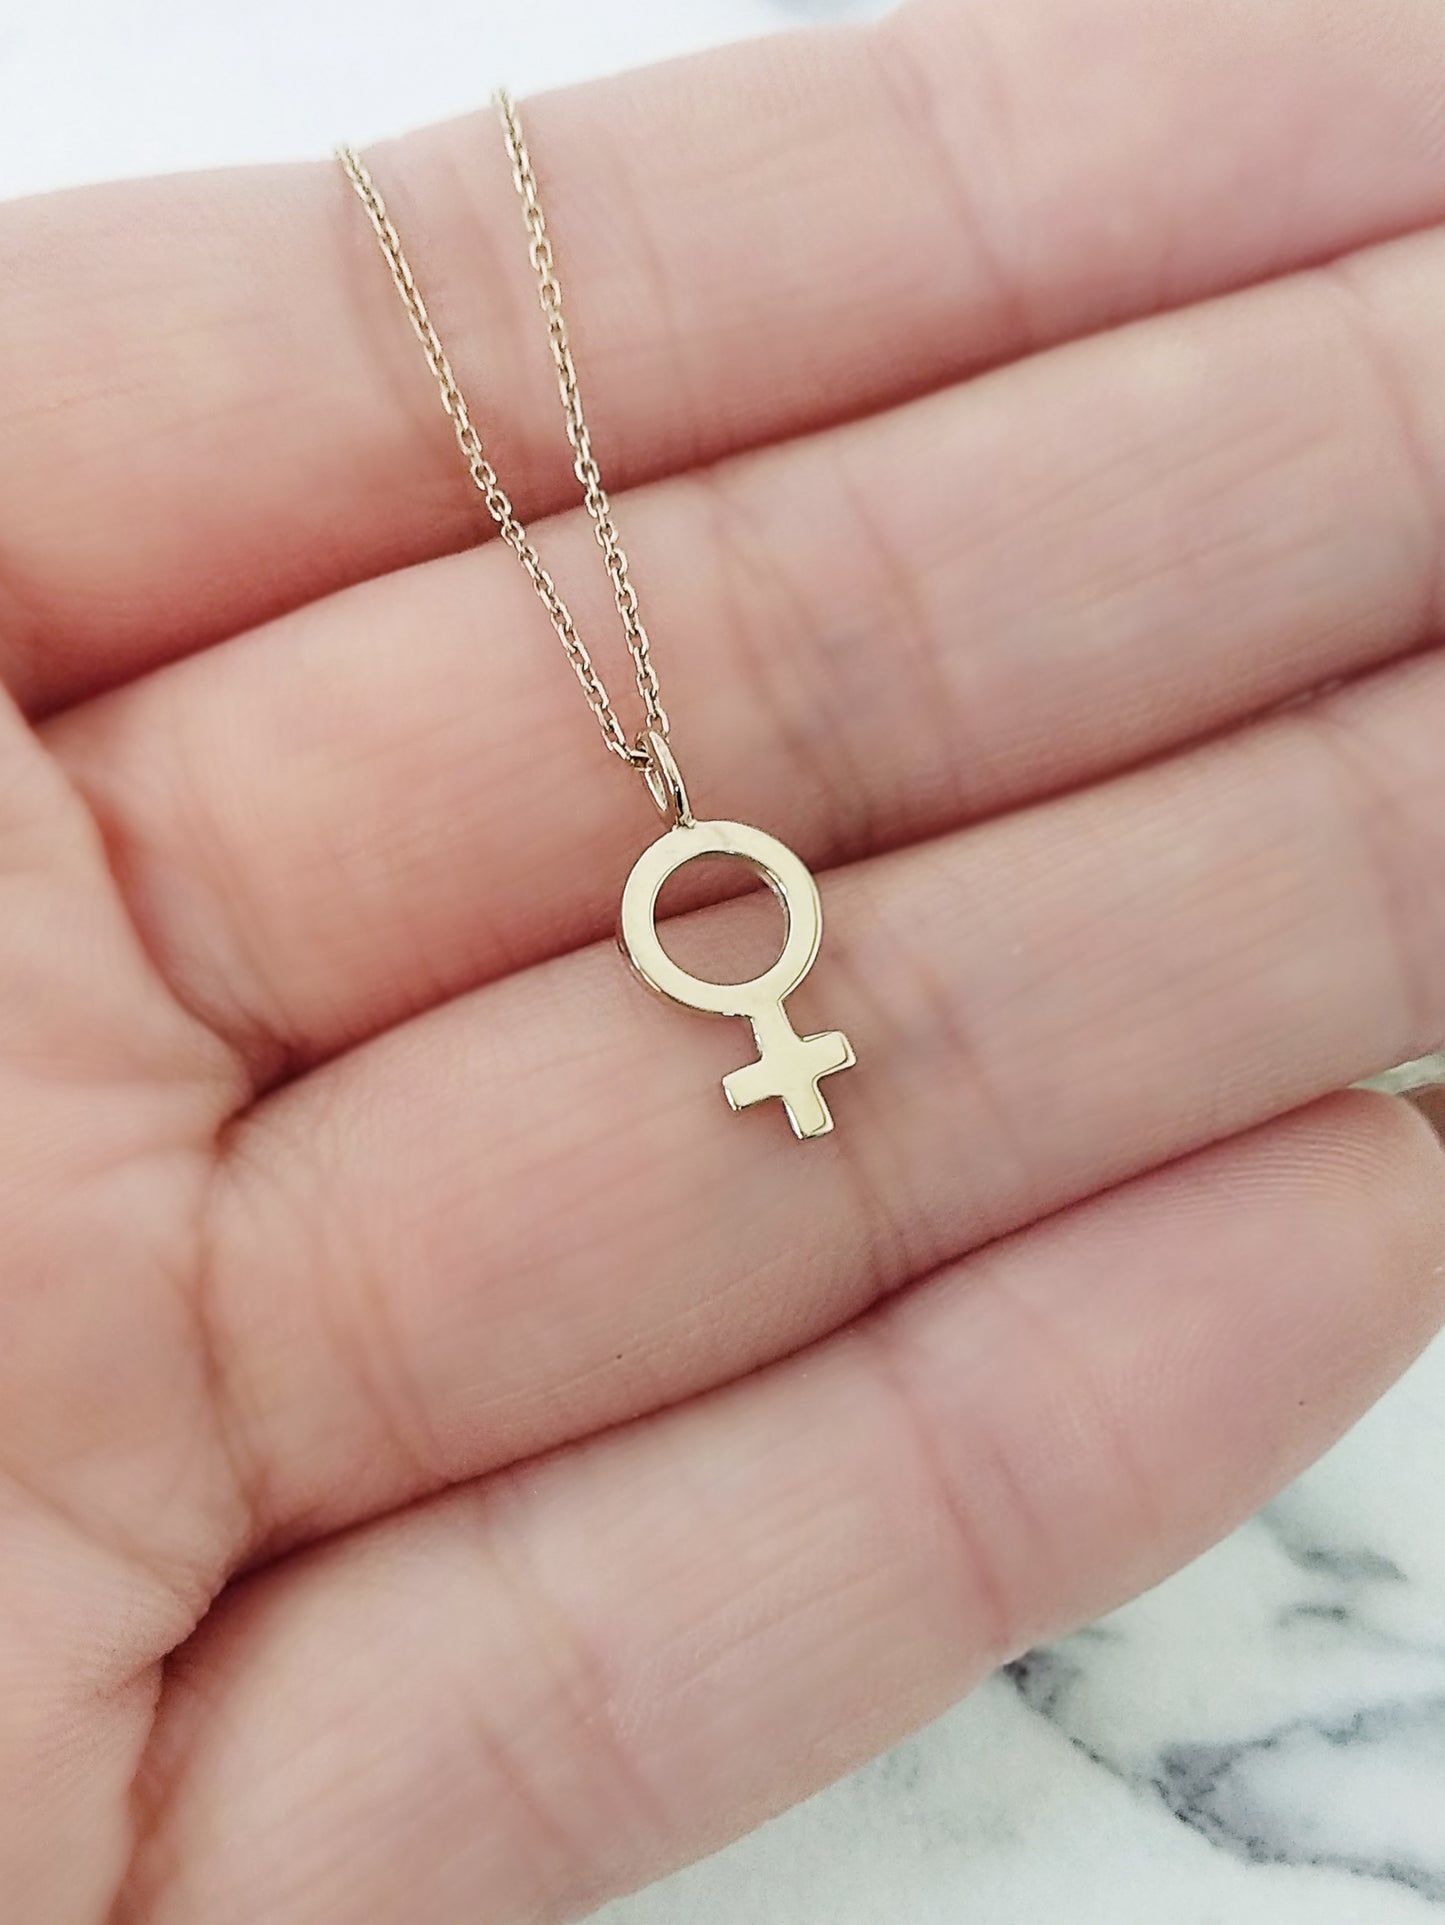 14K 9K Solid Gold Female Symbol Venus Pendant Necklace